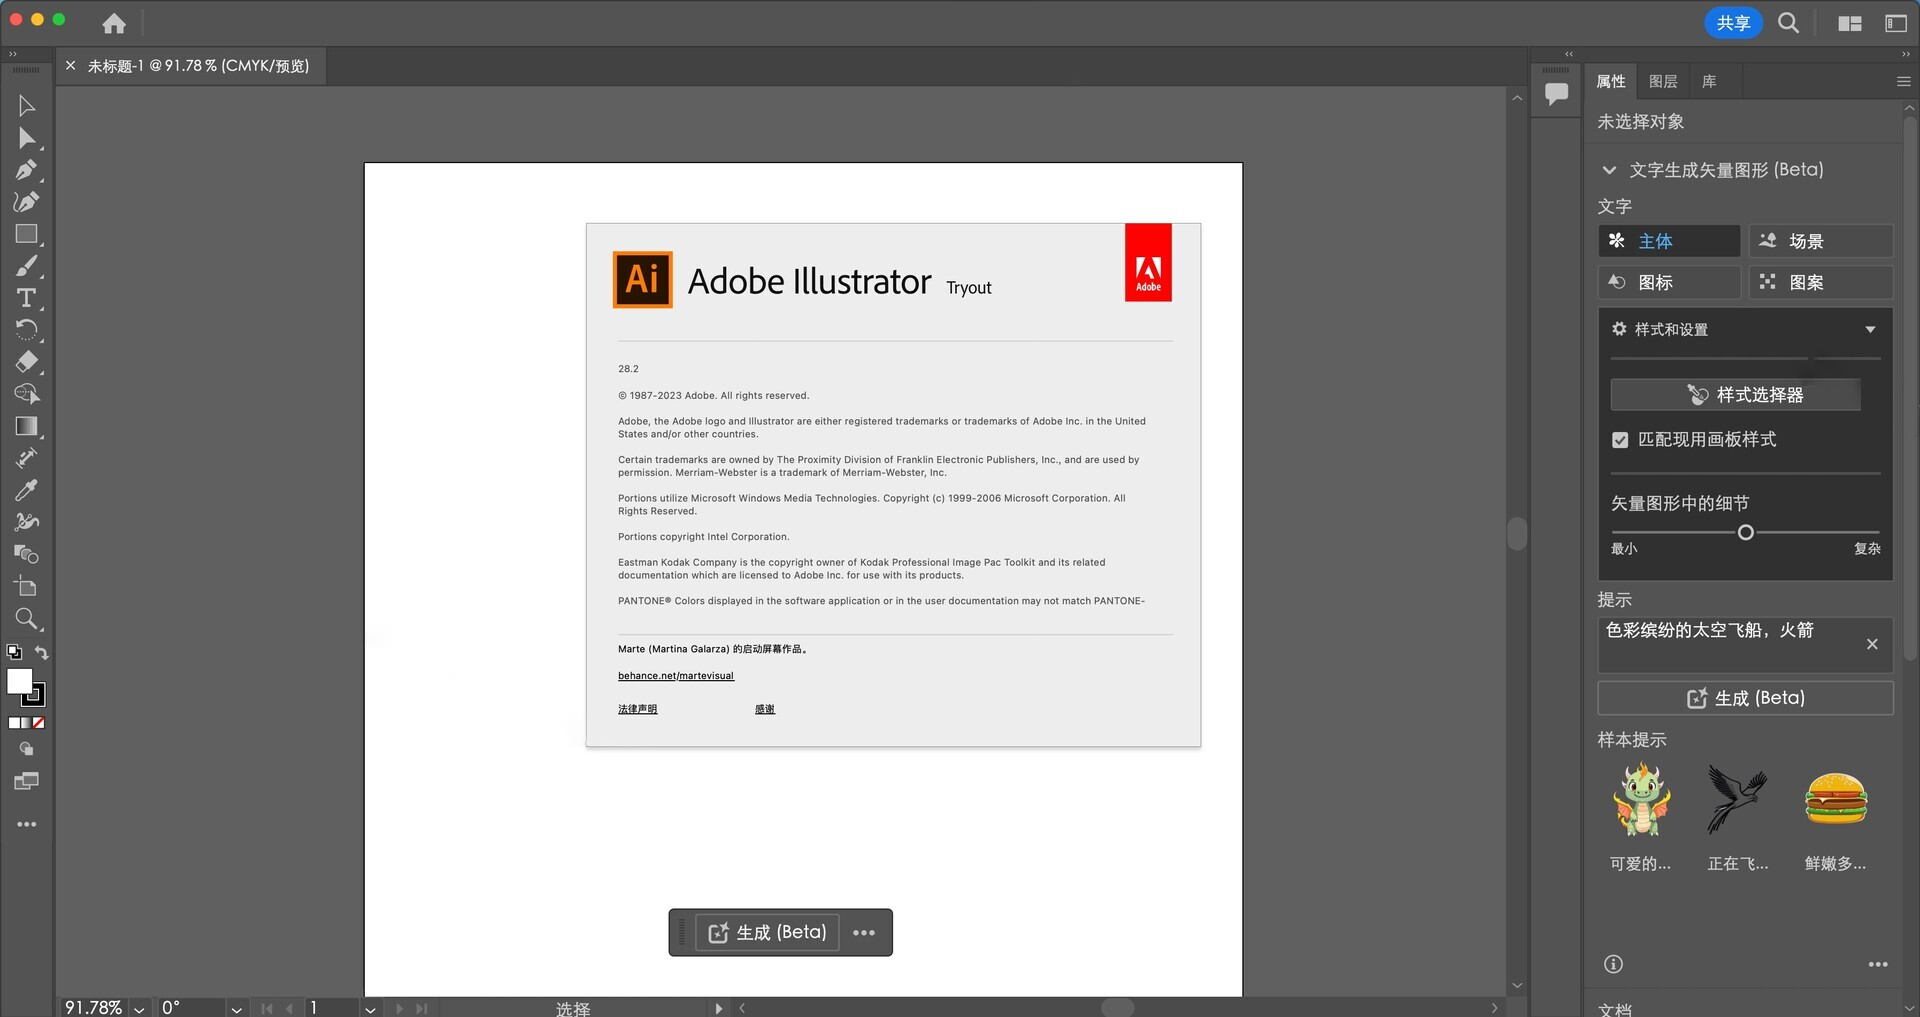 Adobe Illustrator 2024 for Mac v28.3 AI矢量图形编辑软件 破解版-1